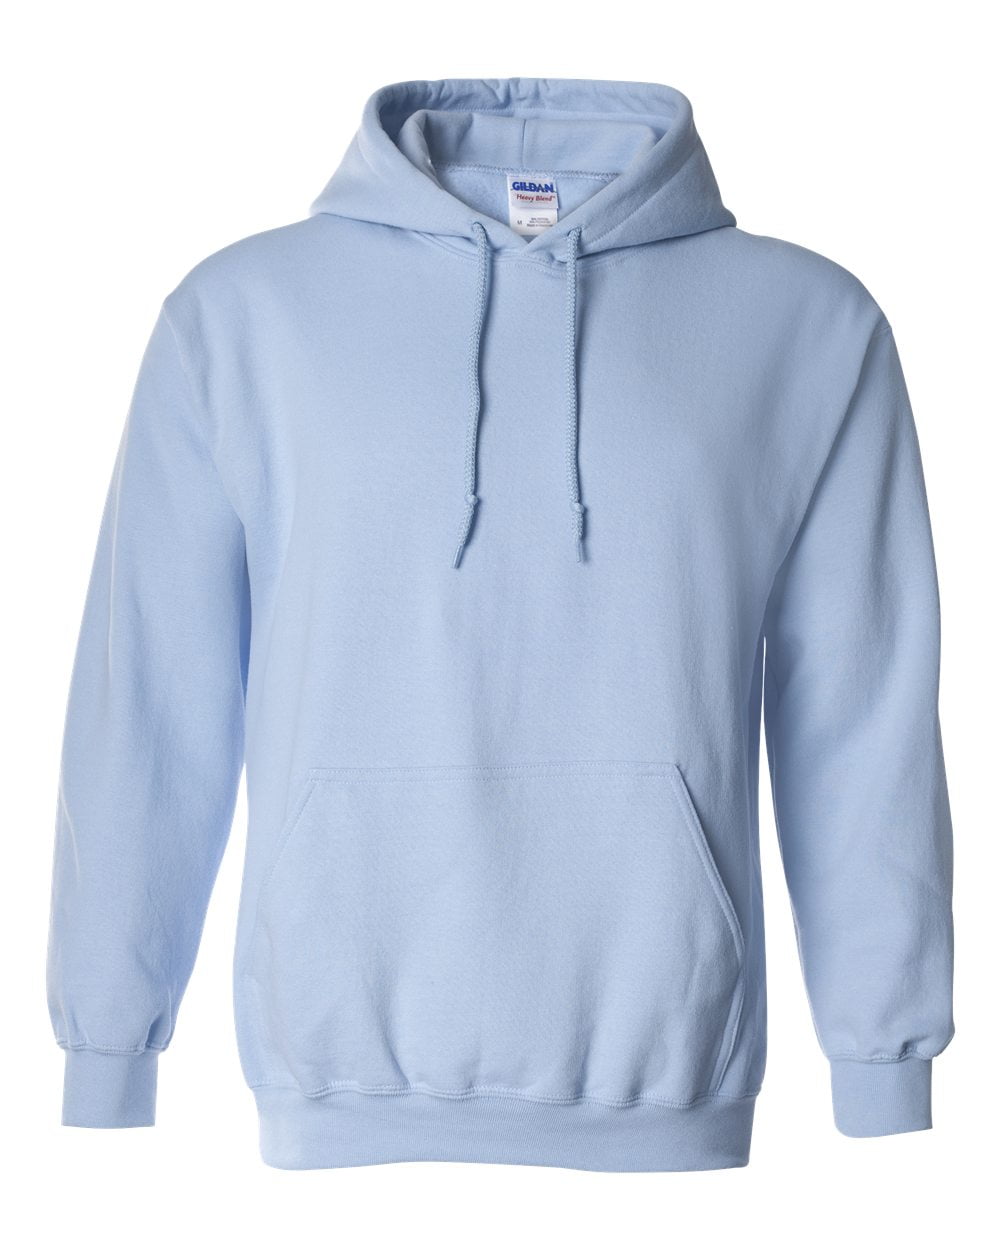 Men Multi Colors Hooded Sweatshirt Men Hoodies Color Light Blue 5X